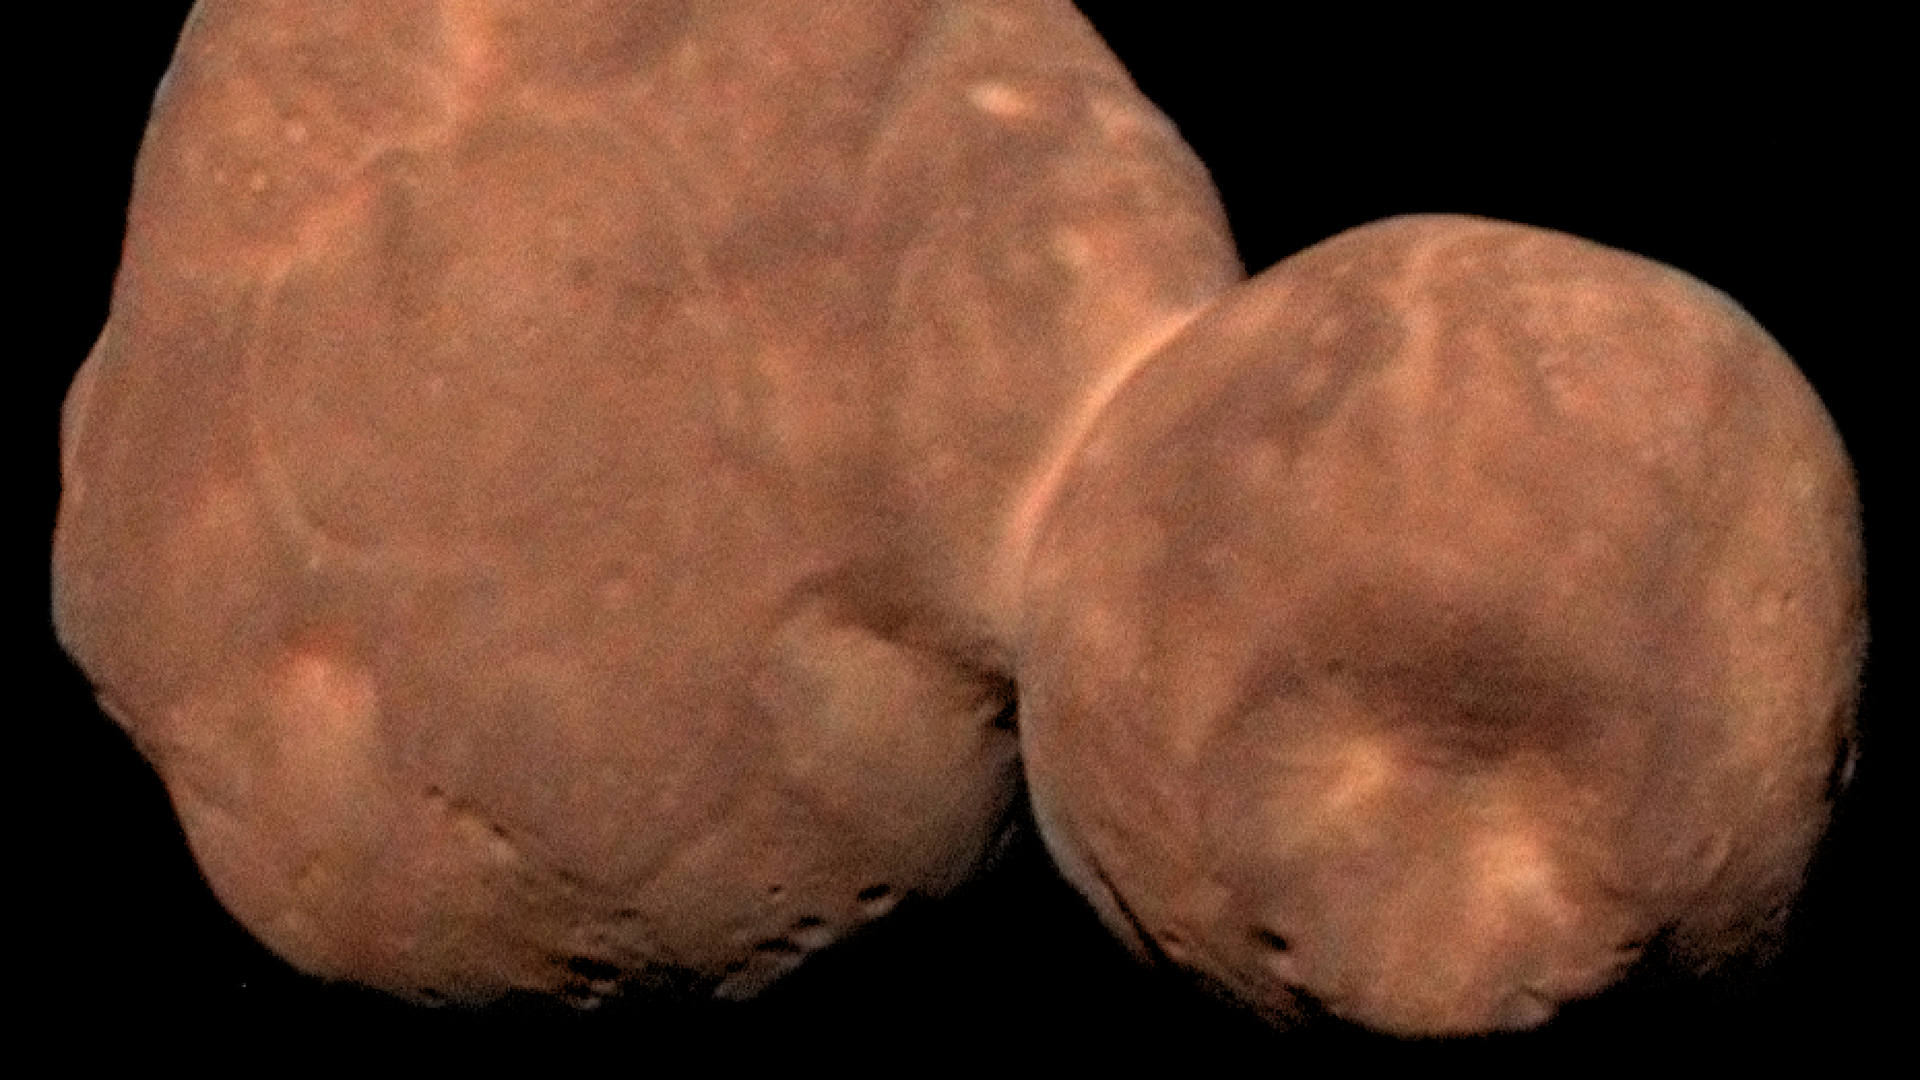 Arrokoth as seen by New Horizons